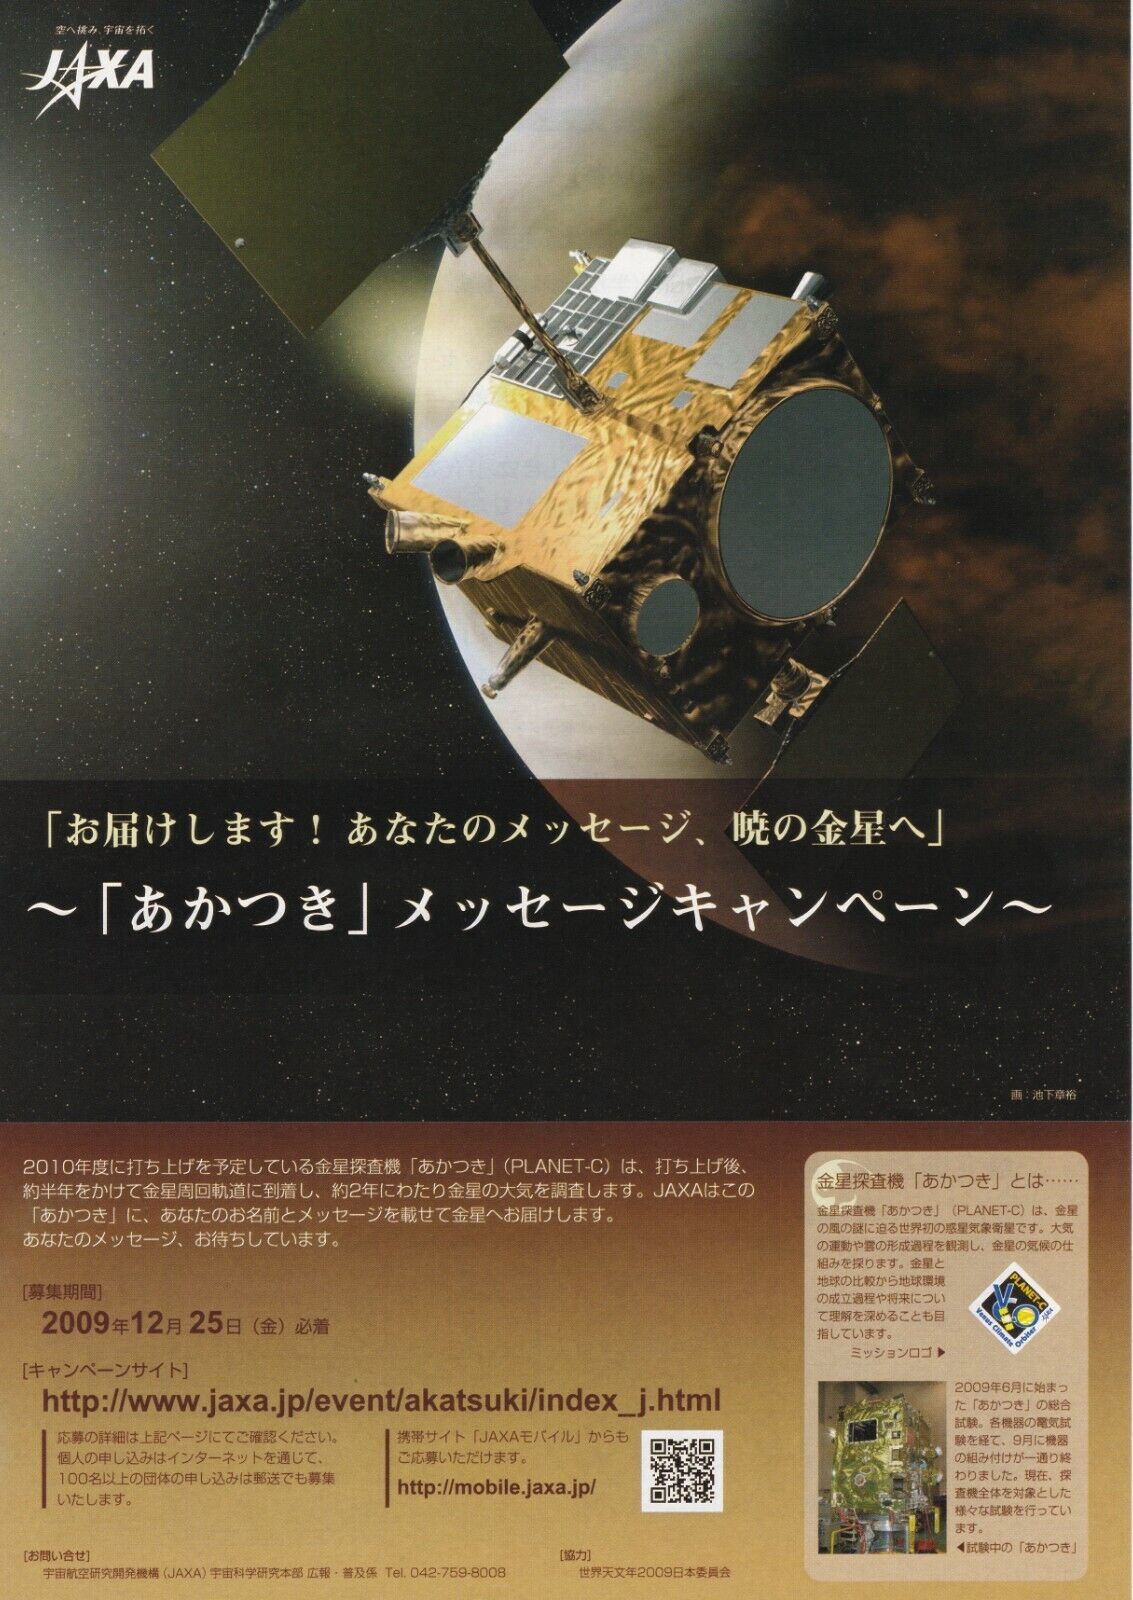 Akatsuki - Venus Climate Orbiter | 2010 | Original Japanese Poster | Chirashi